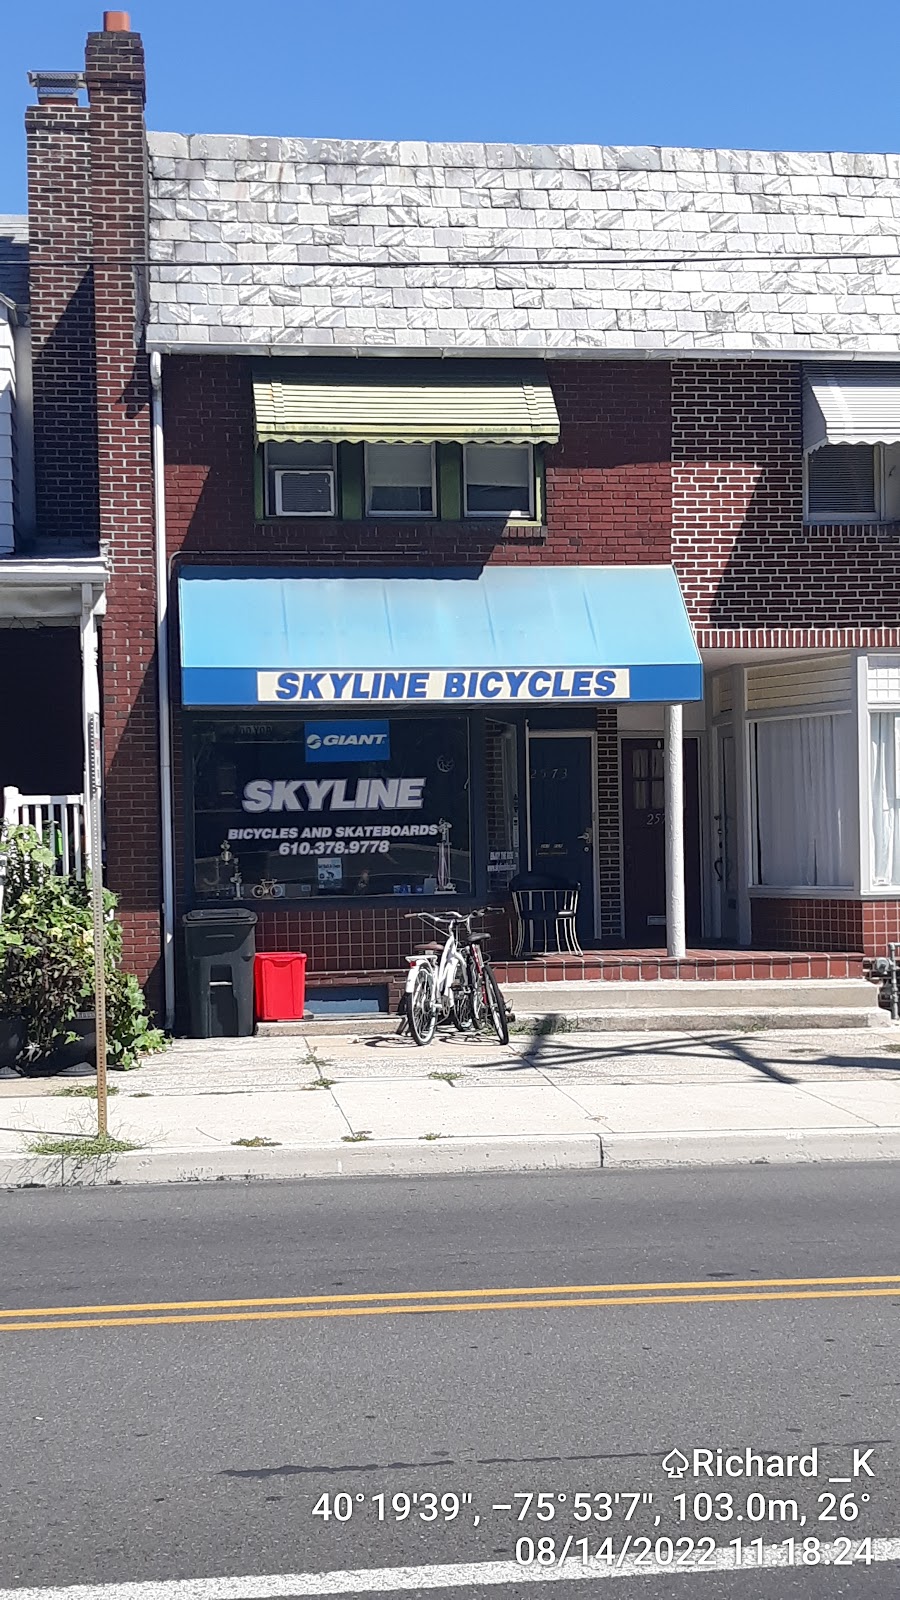 Skyline Bicycles | 2573 Perkiomen Ave, Reading, PA 19606 | Phone: (610) 378-9778